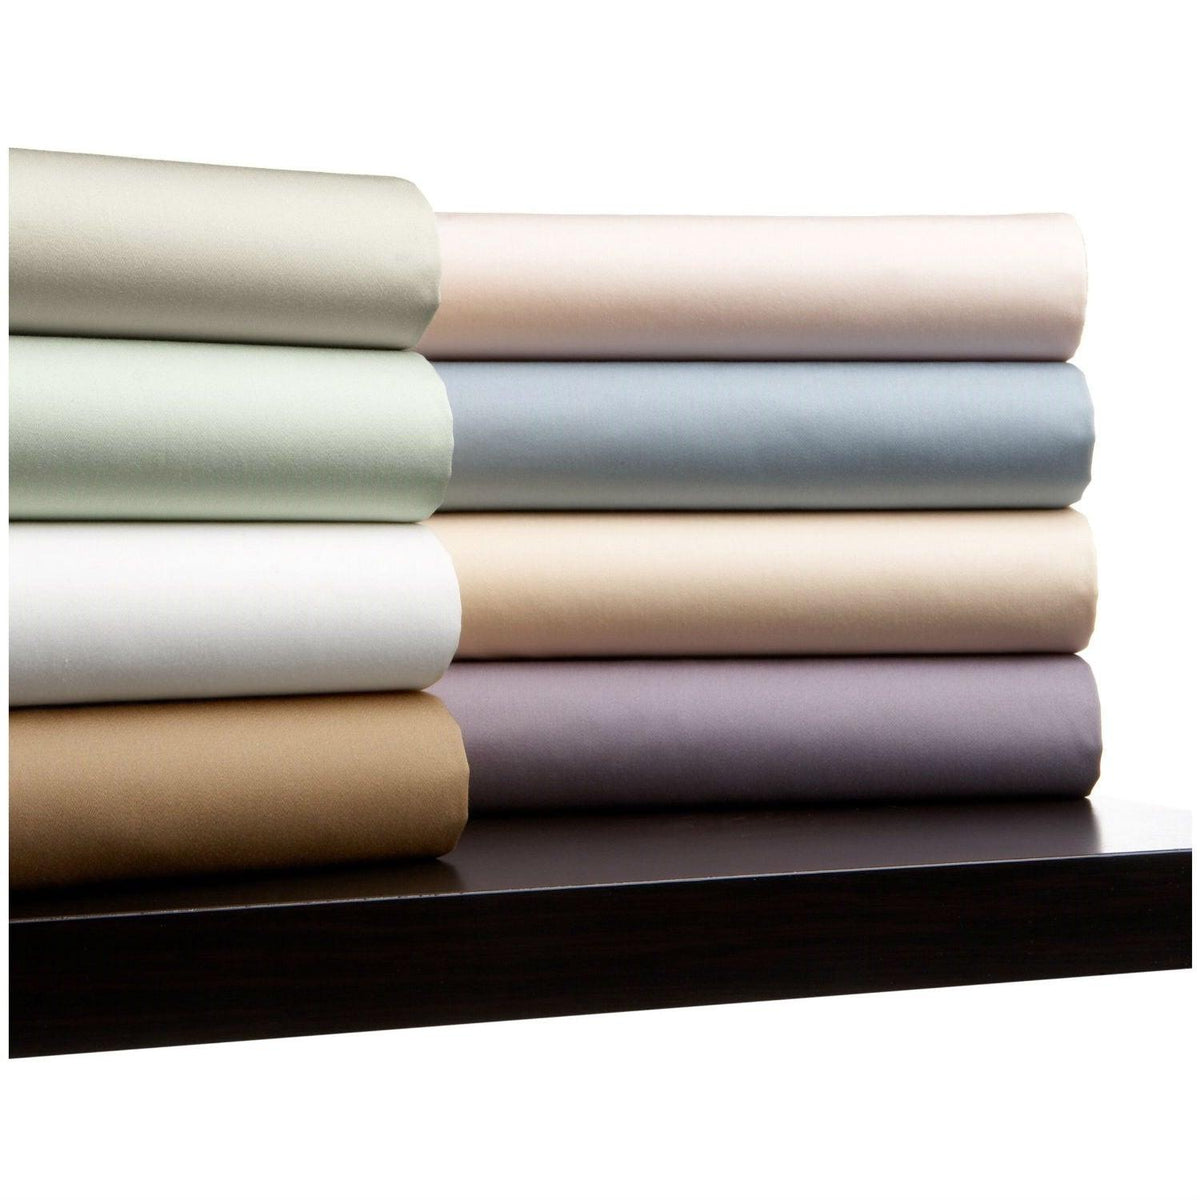 Full size 400-Thread Count Egyptian Cotton Sheet Set in White - beddingbag.com